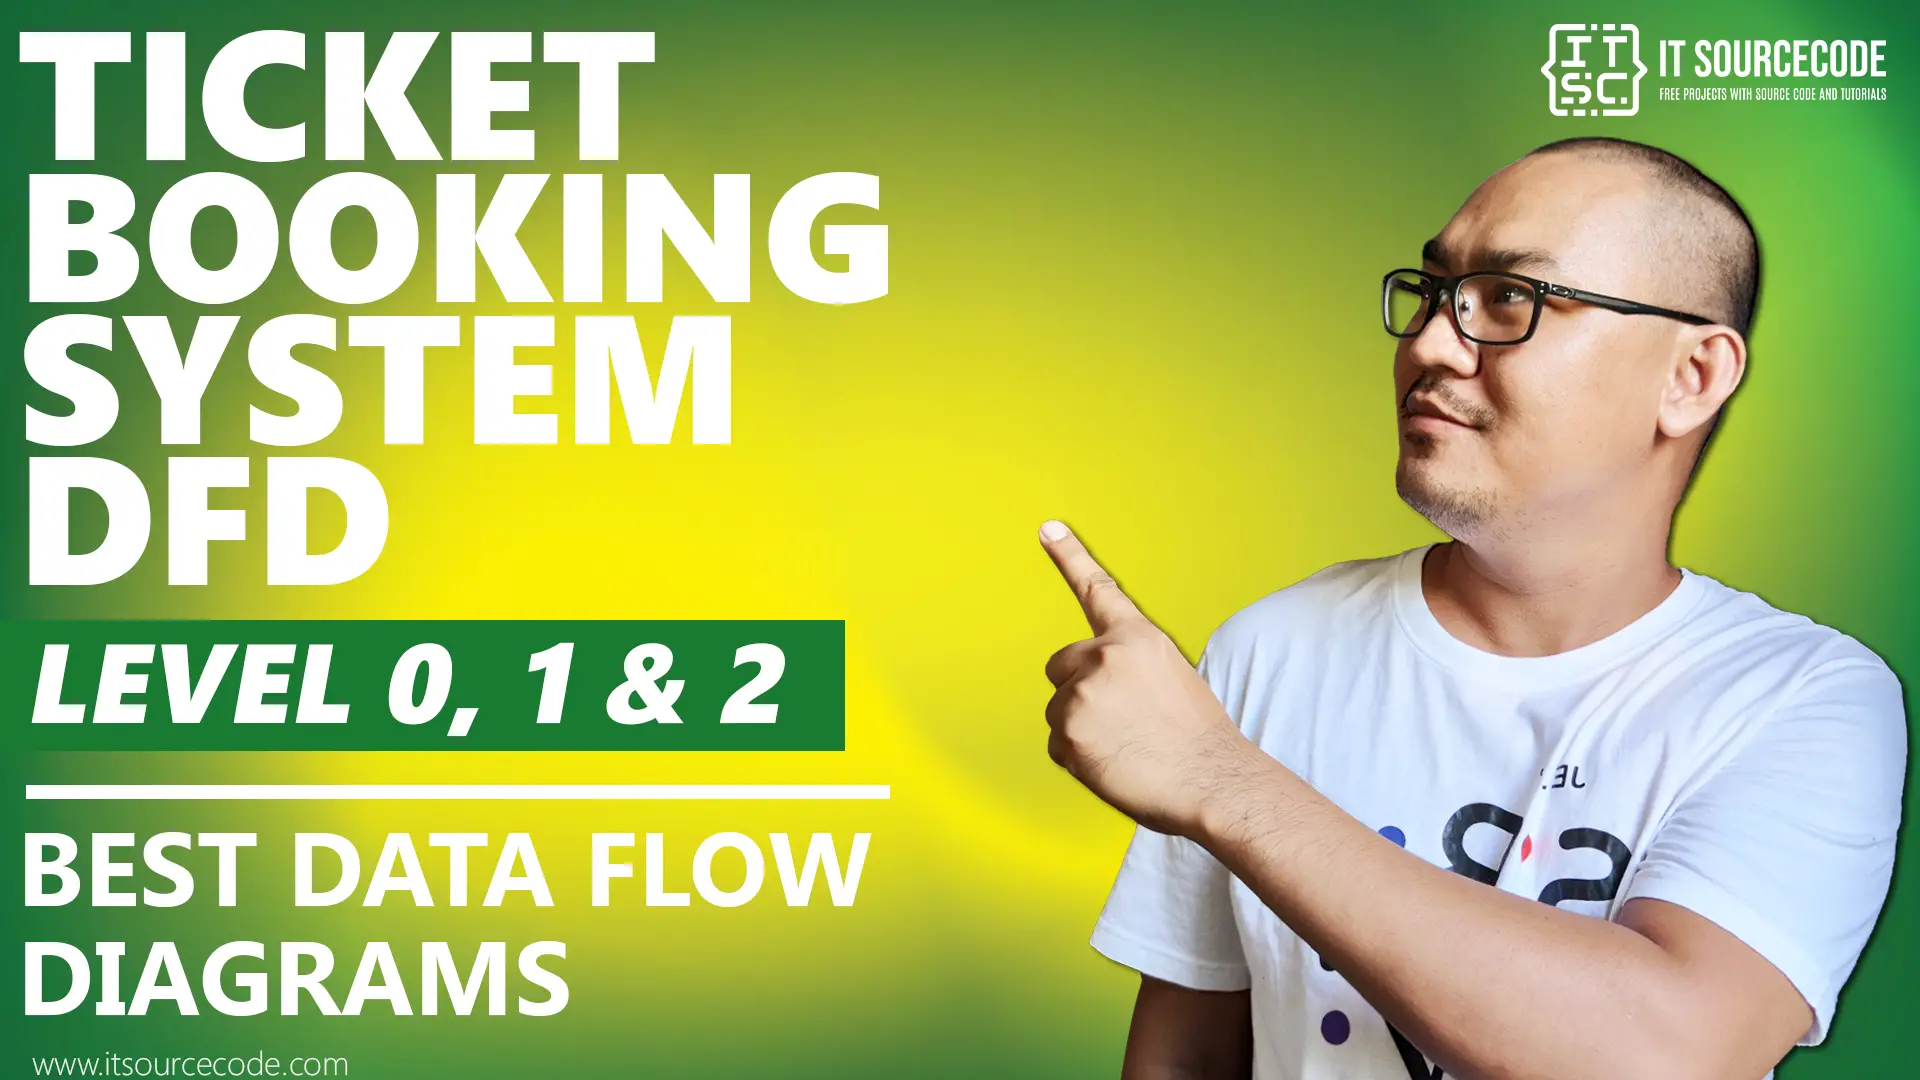 Best Data Flow Diagram - Ticket Booking System DFD Level 0 1 2 - 2021